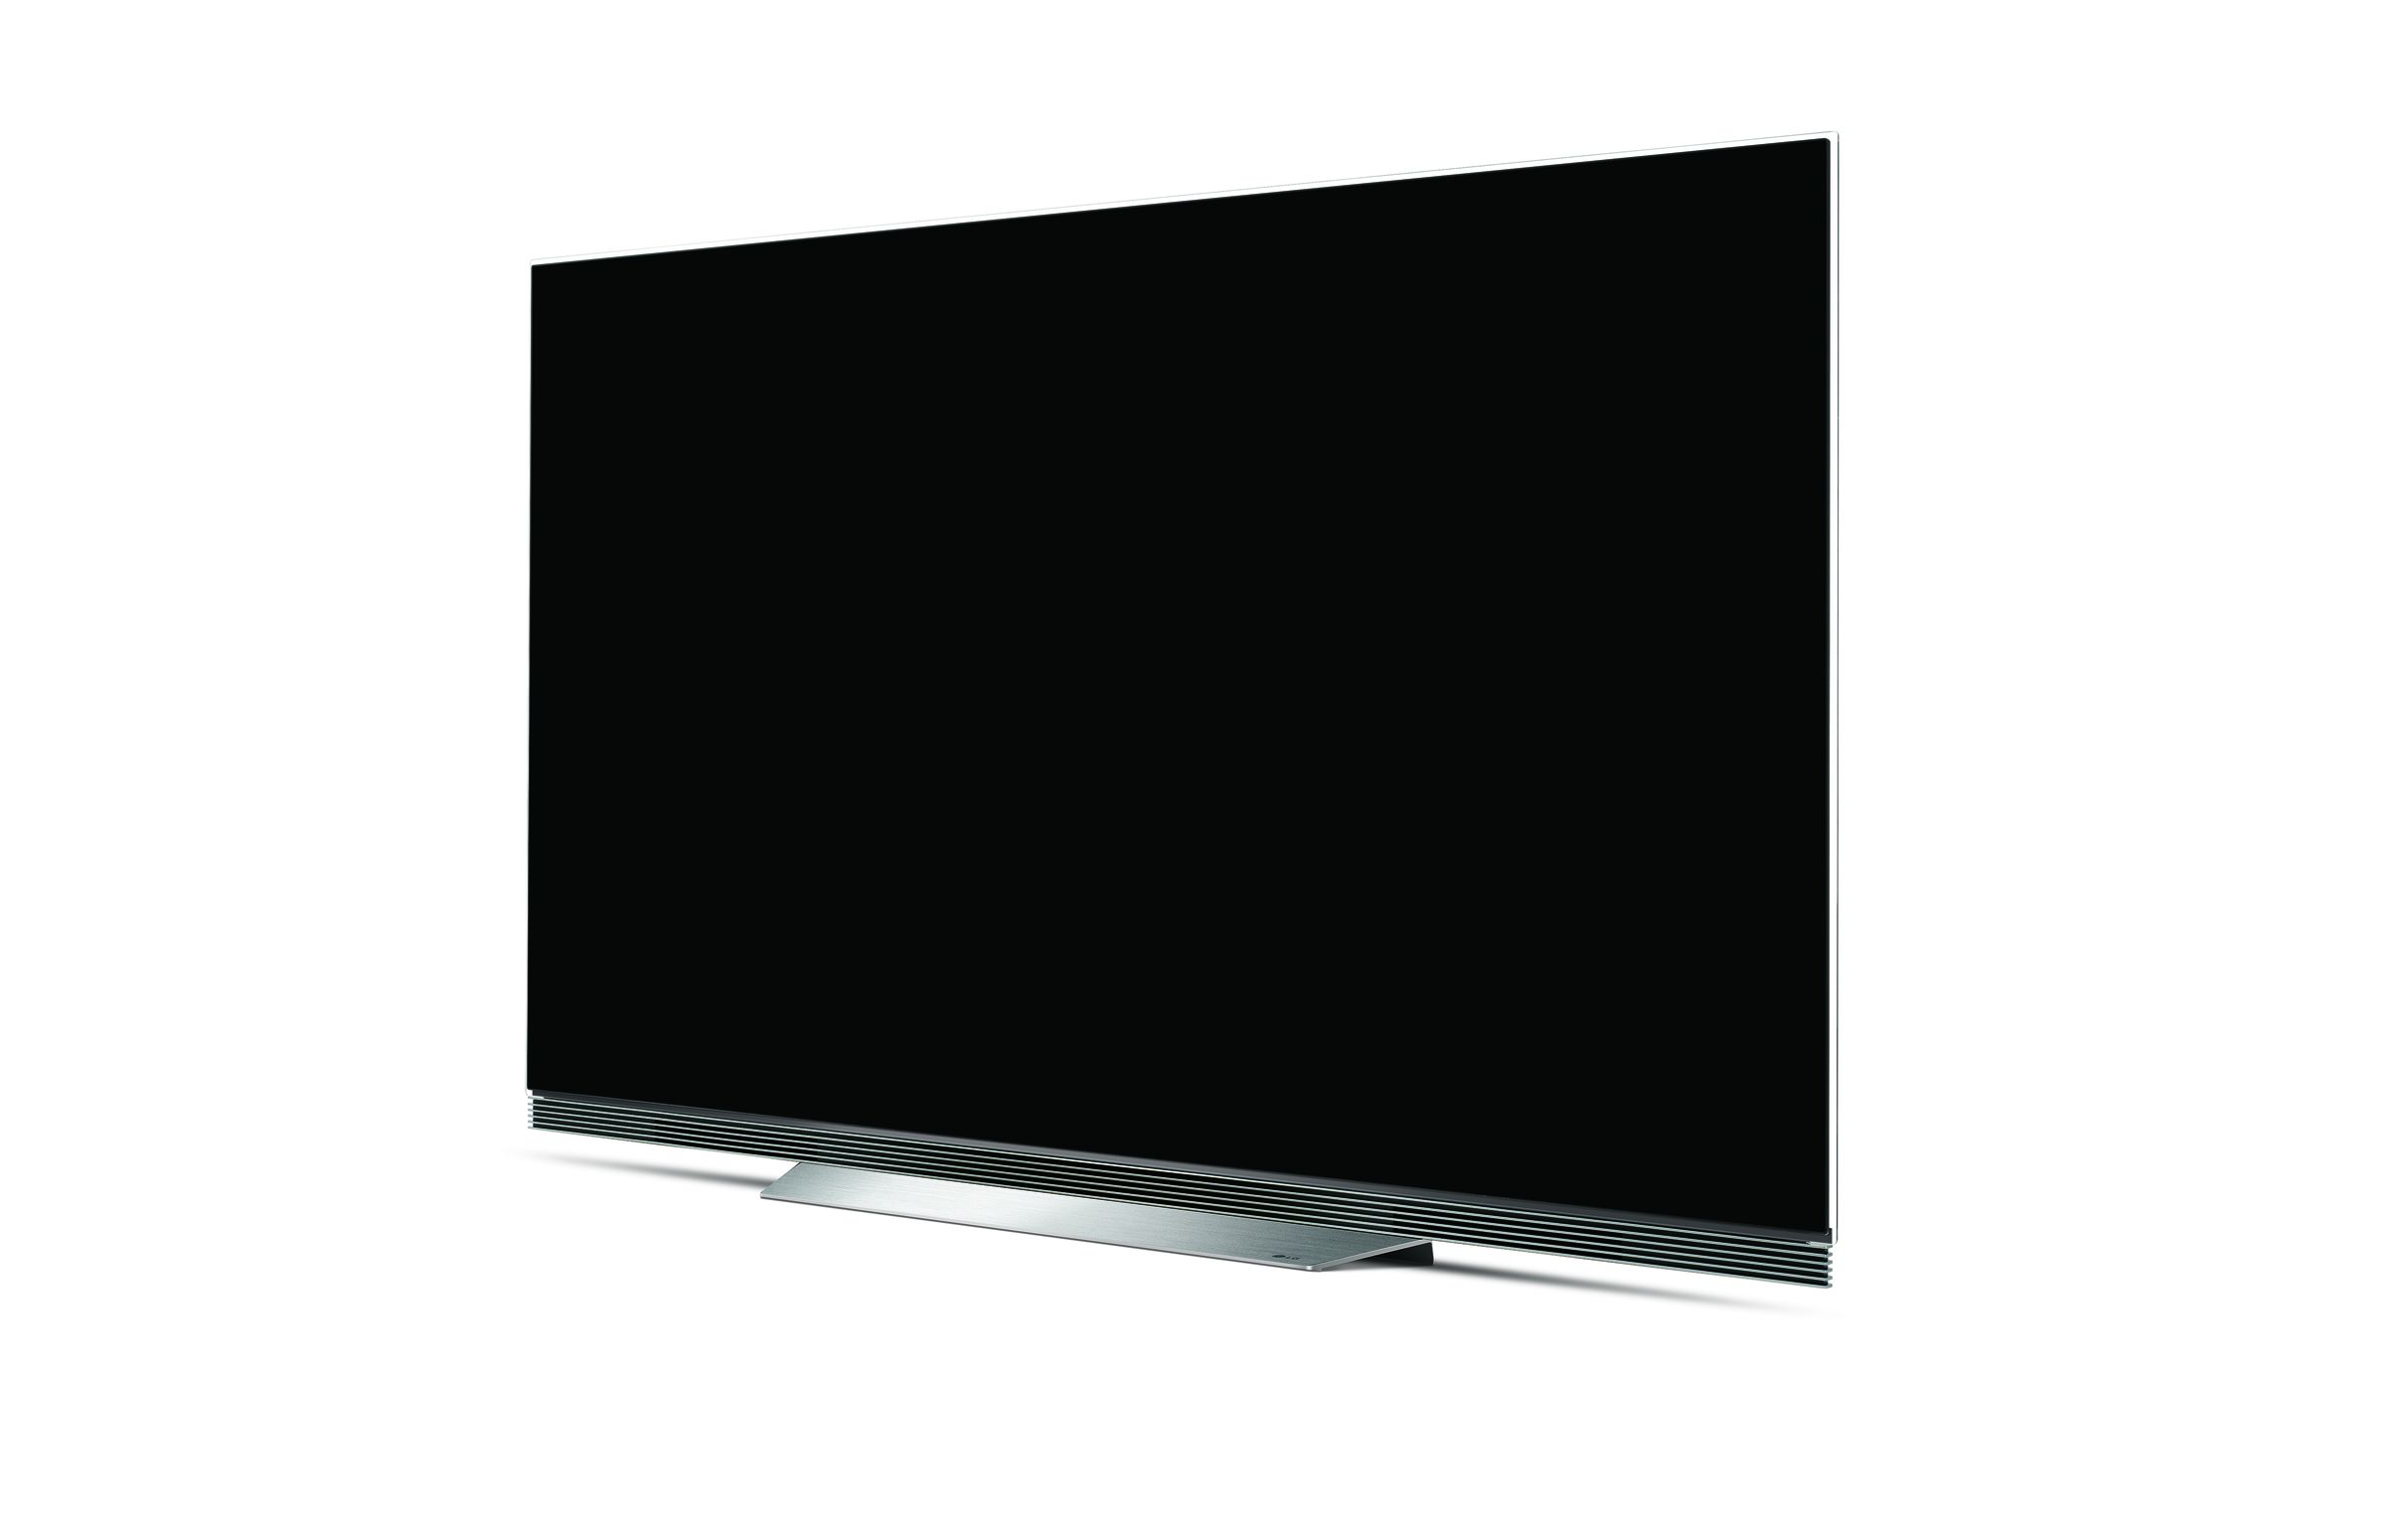 LG OLED TV (E7)